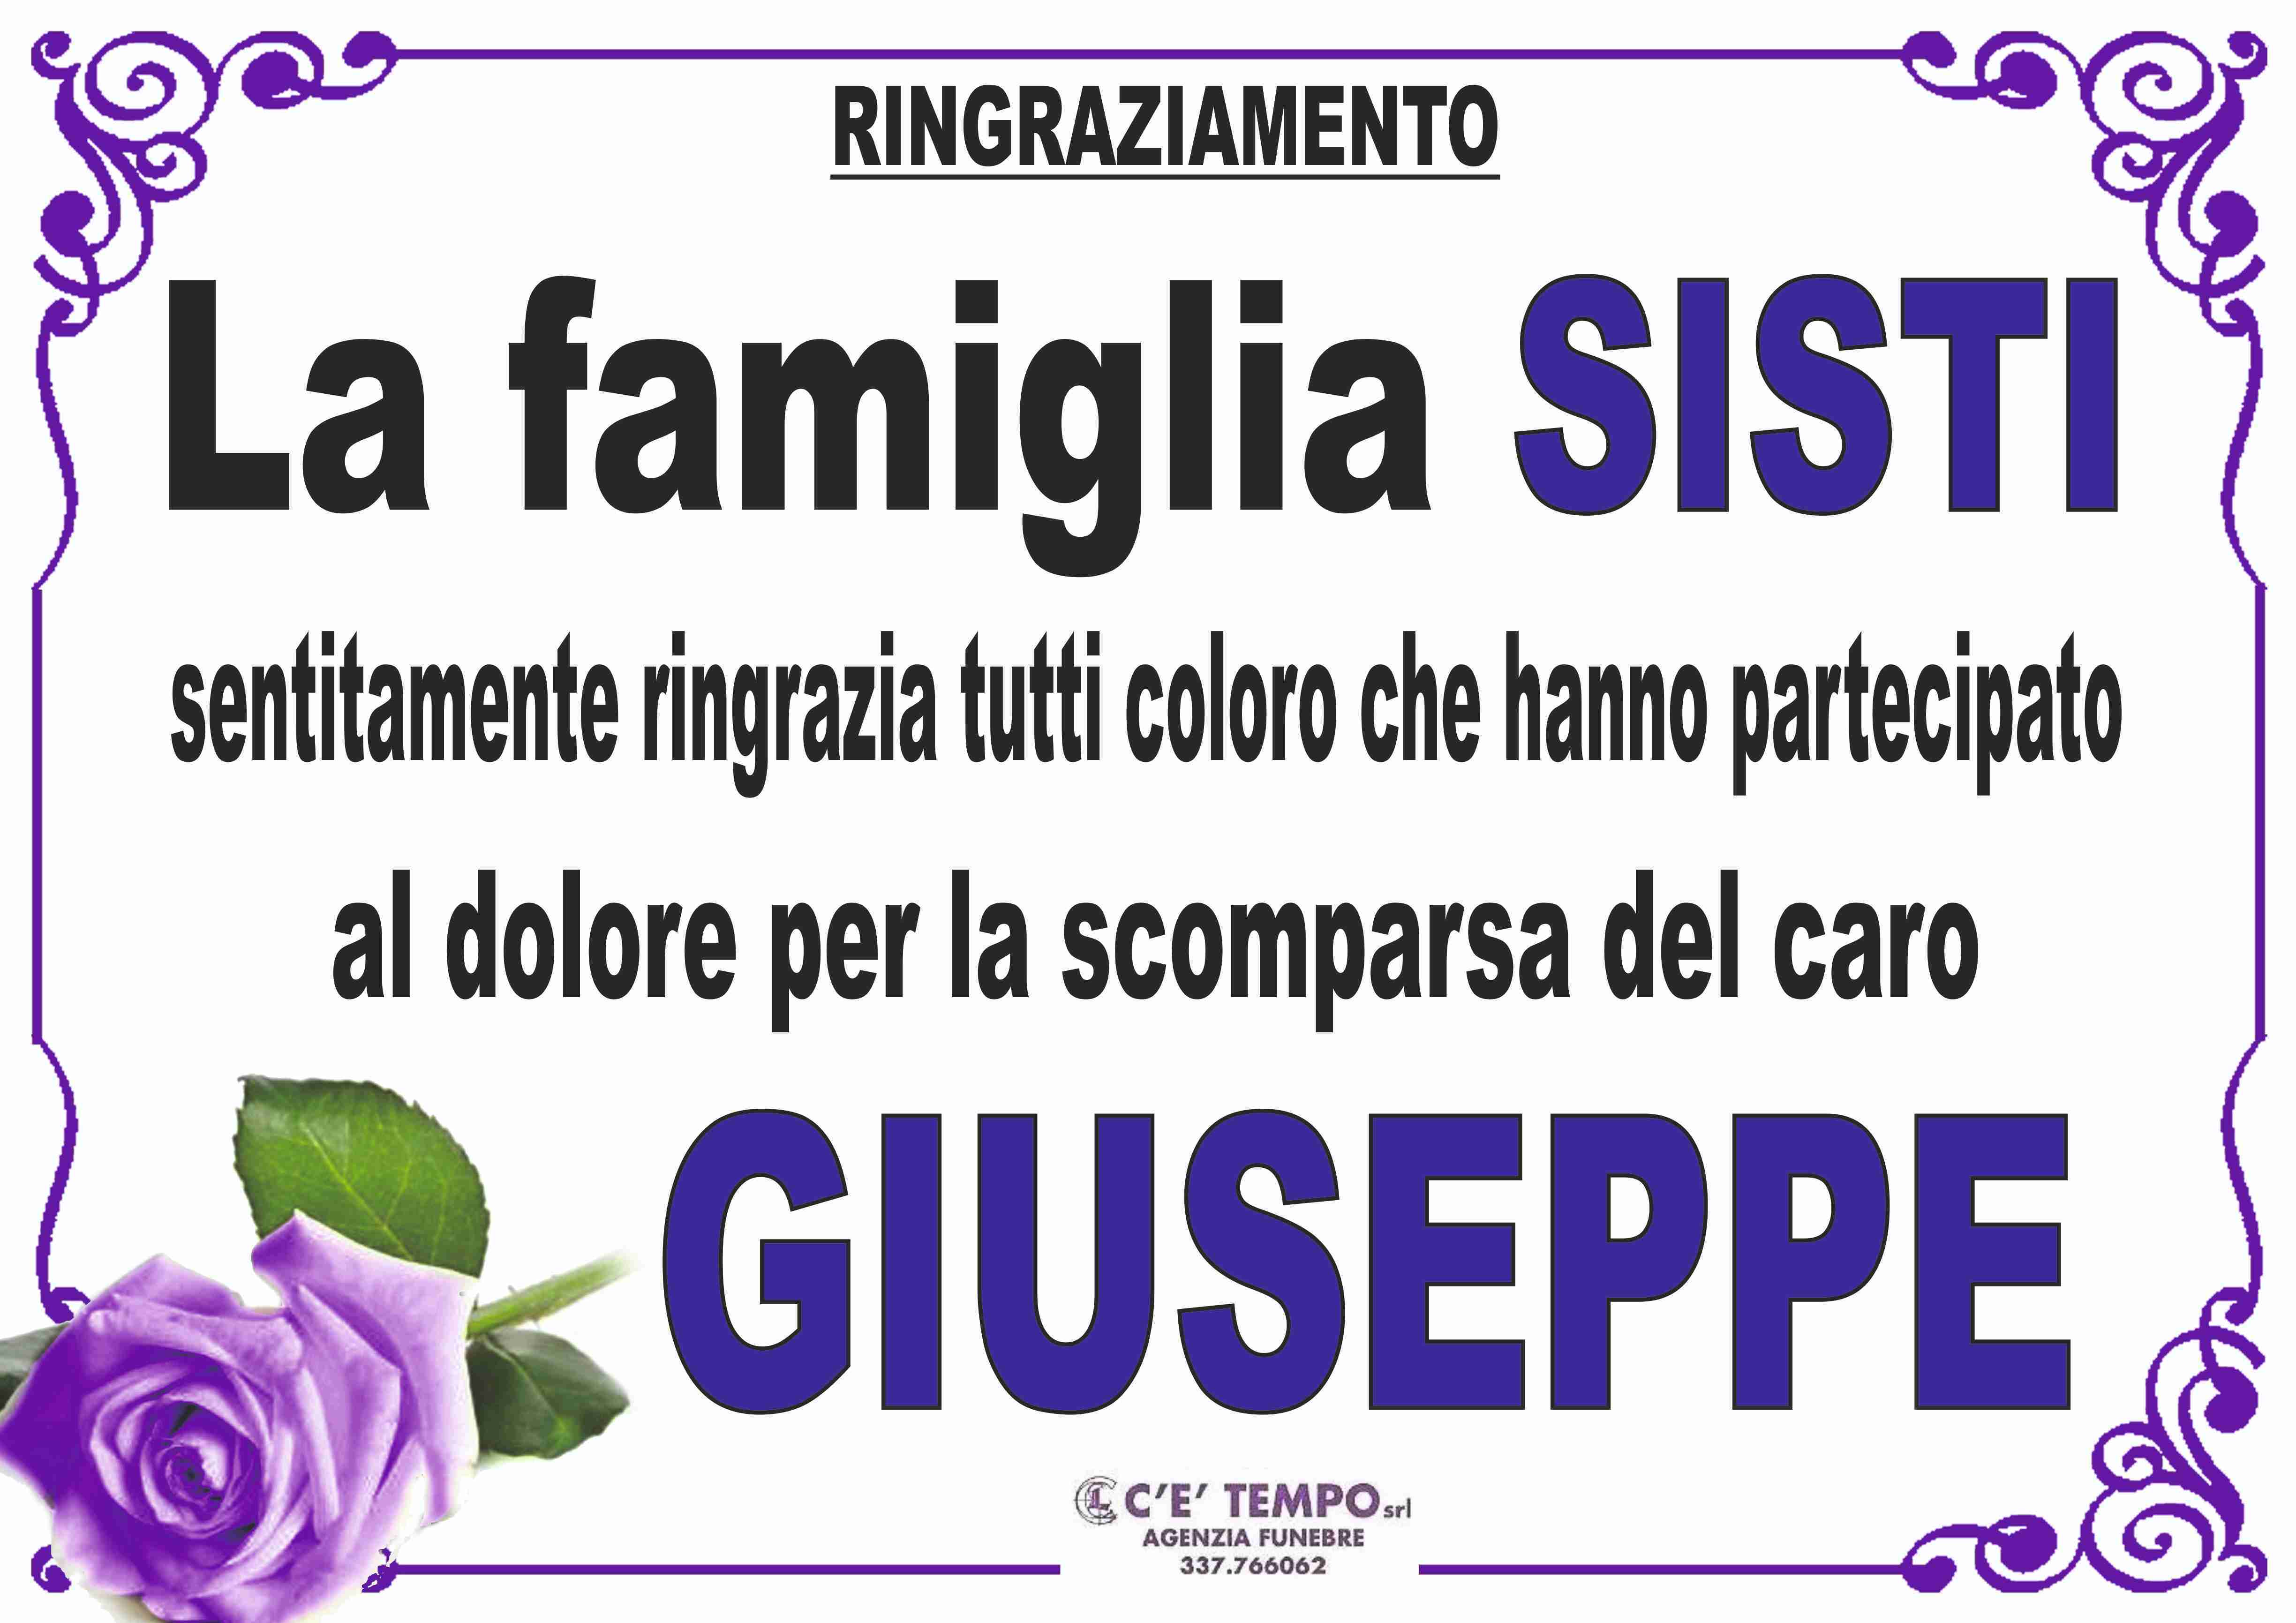 Giuseppe Sisti